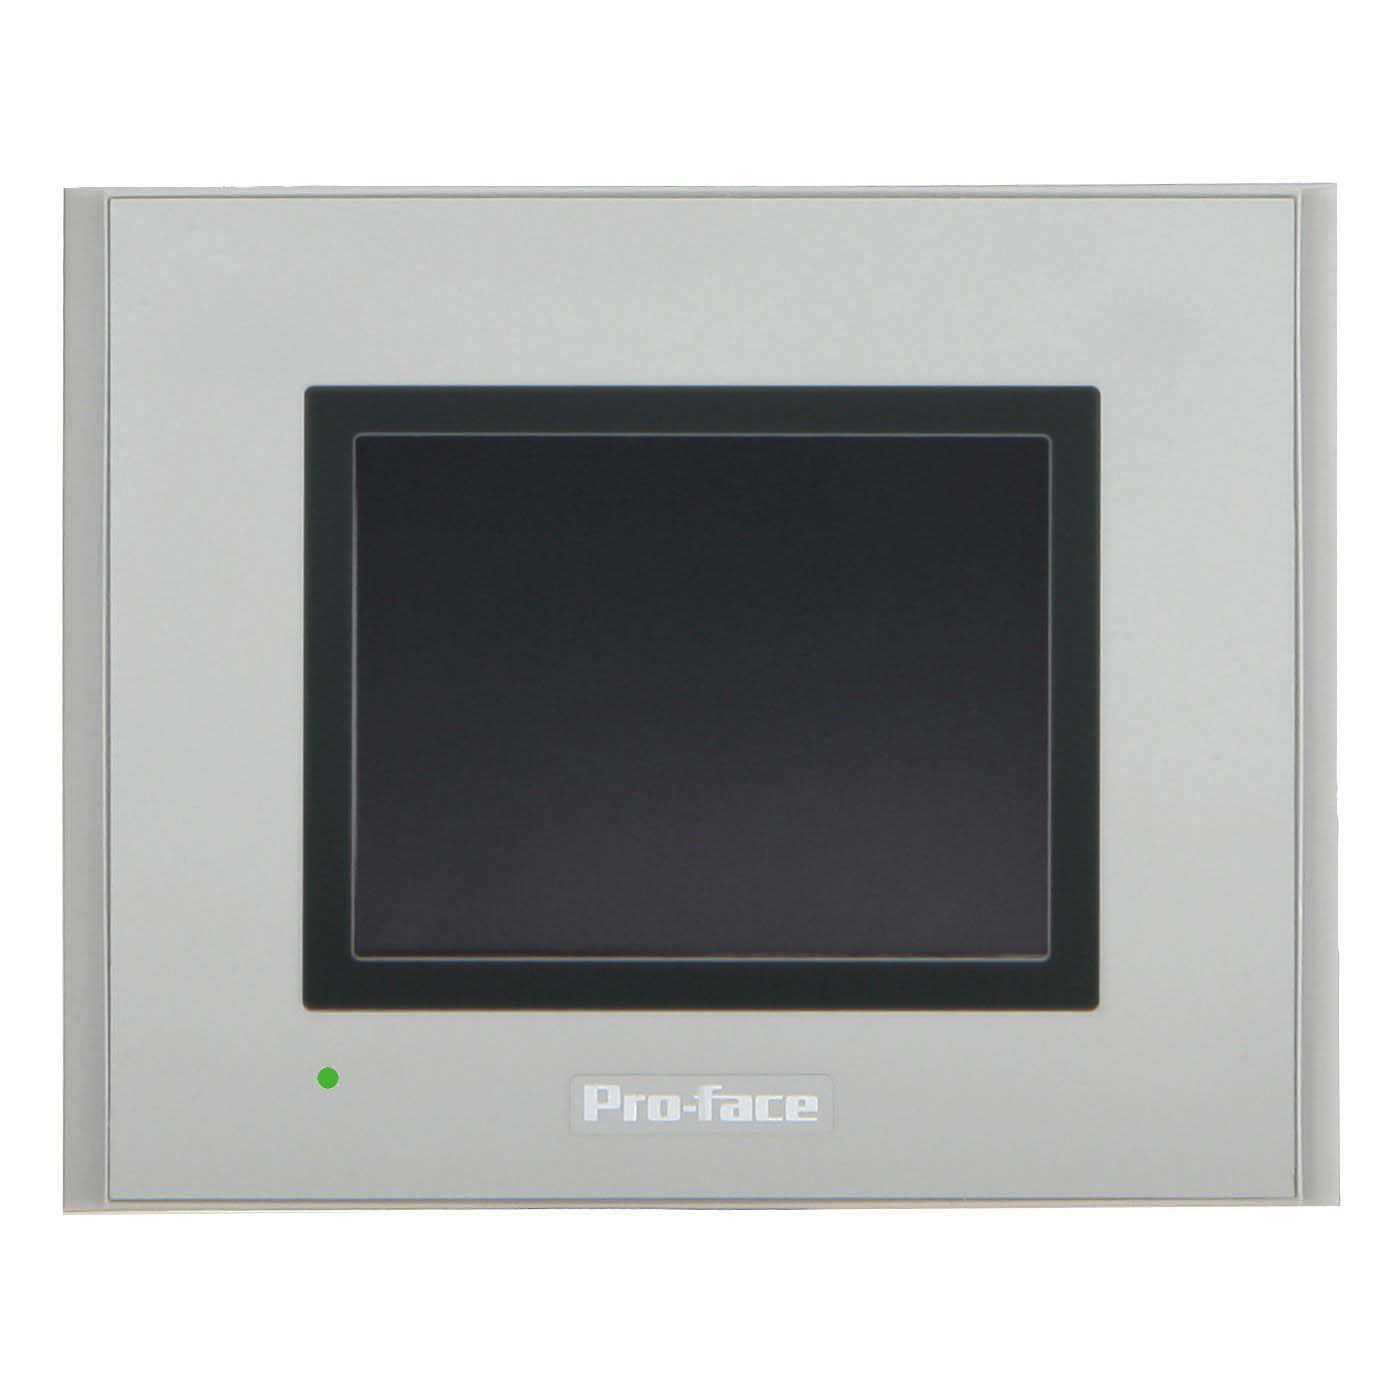 Pro-face GP4000 Farb TFT LCD HMI-Touchscreen 320 x 240pixels, 24 V dc, 132 x 42 x 106 mm